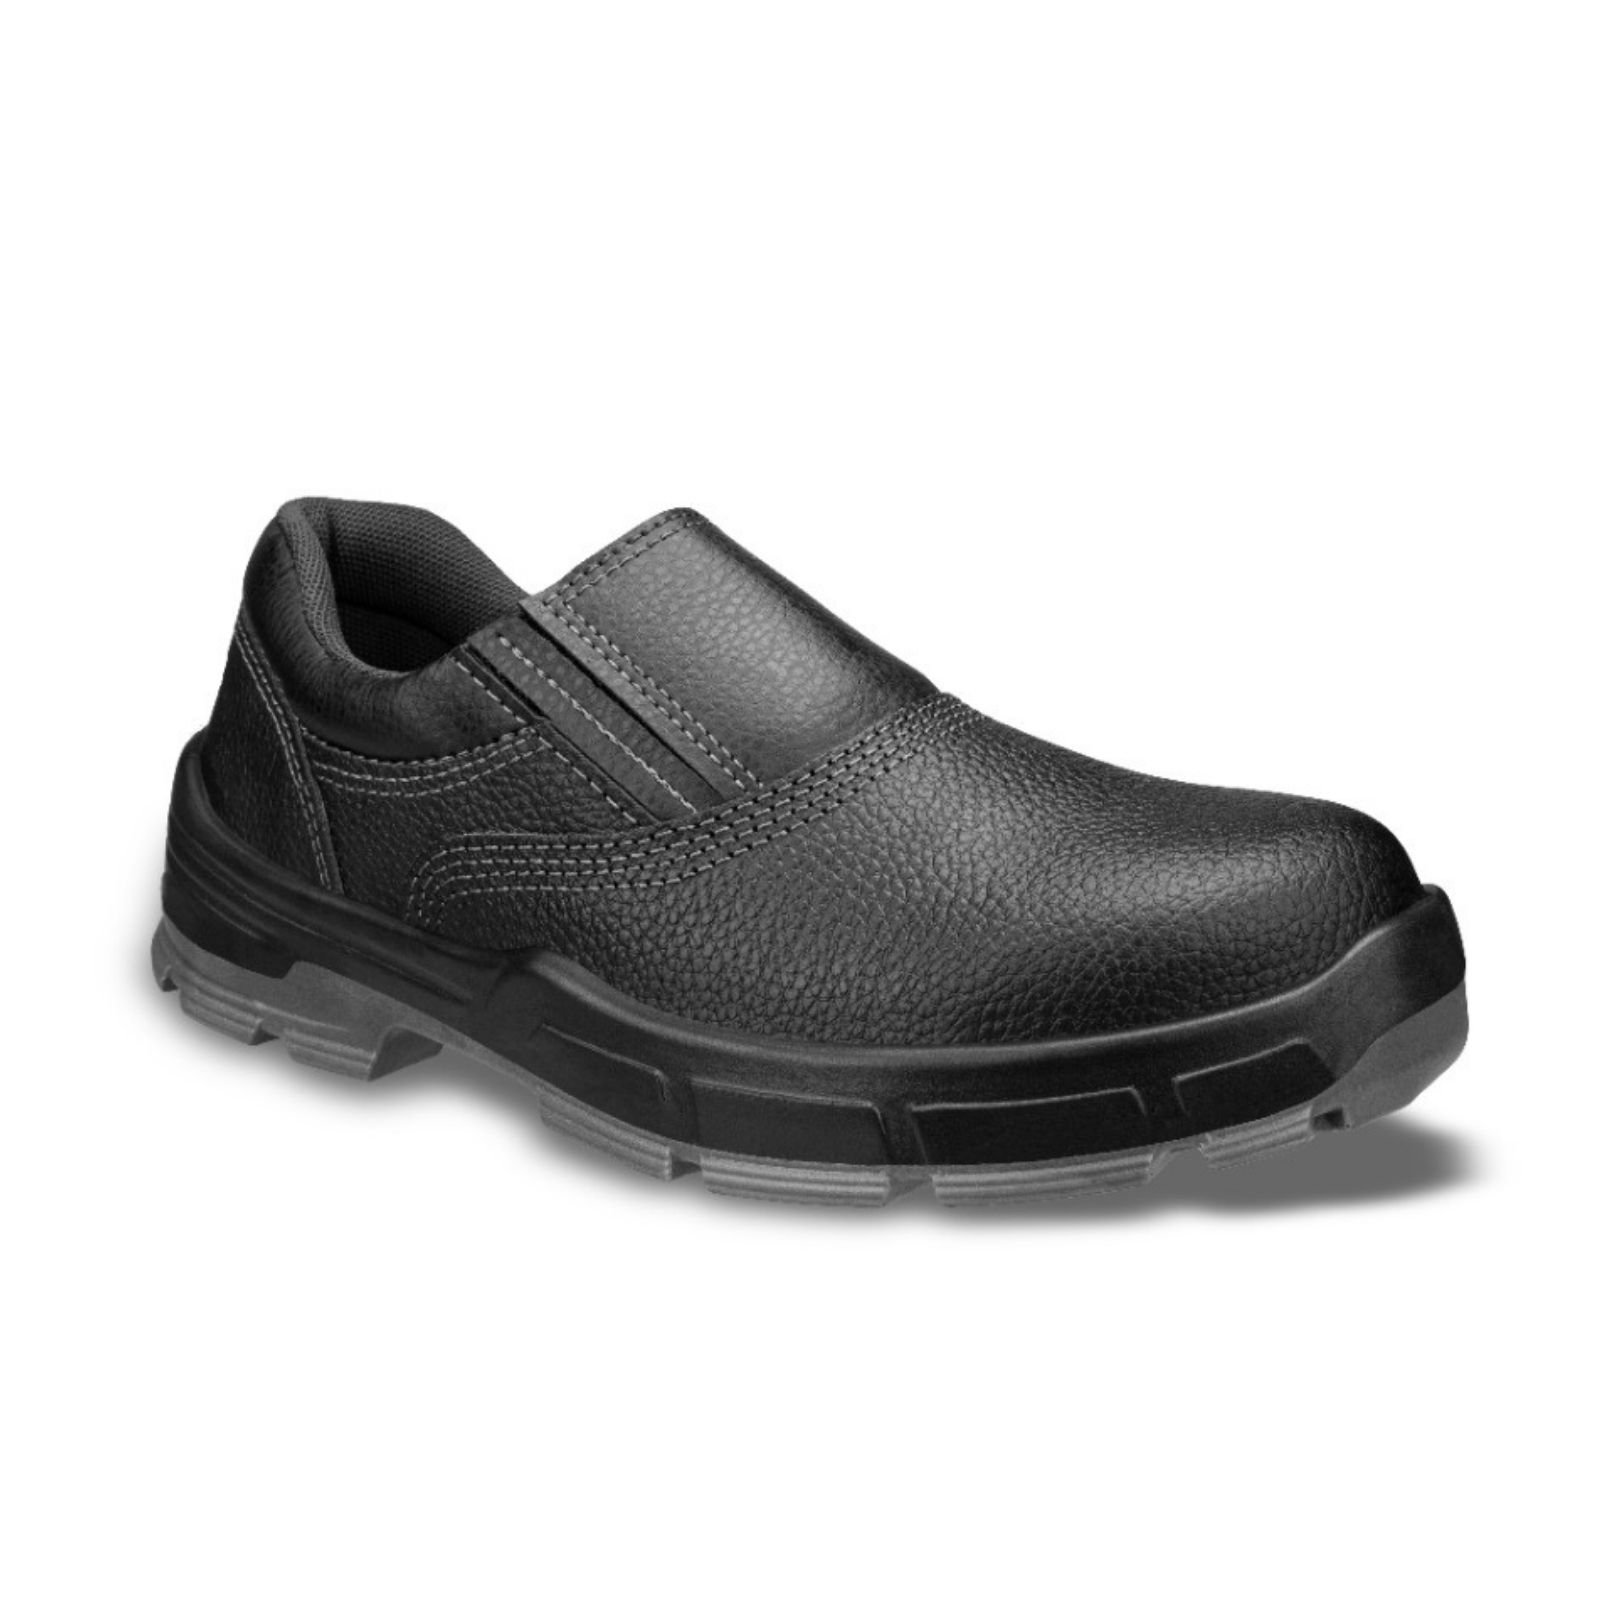 Sapato Segurança Couro Preto Elástico Monodensidade Bracol Bico PVC 2020BSES4600LL CA 43443